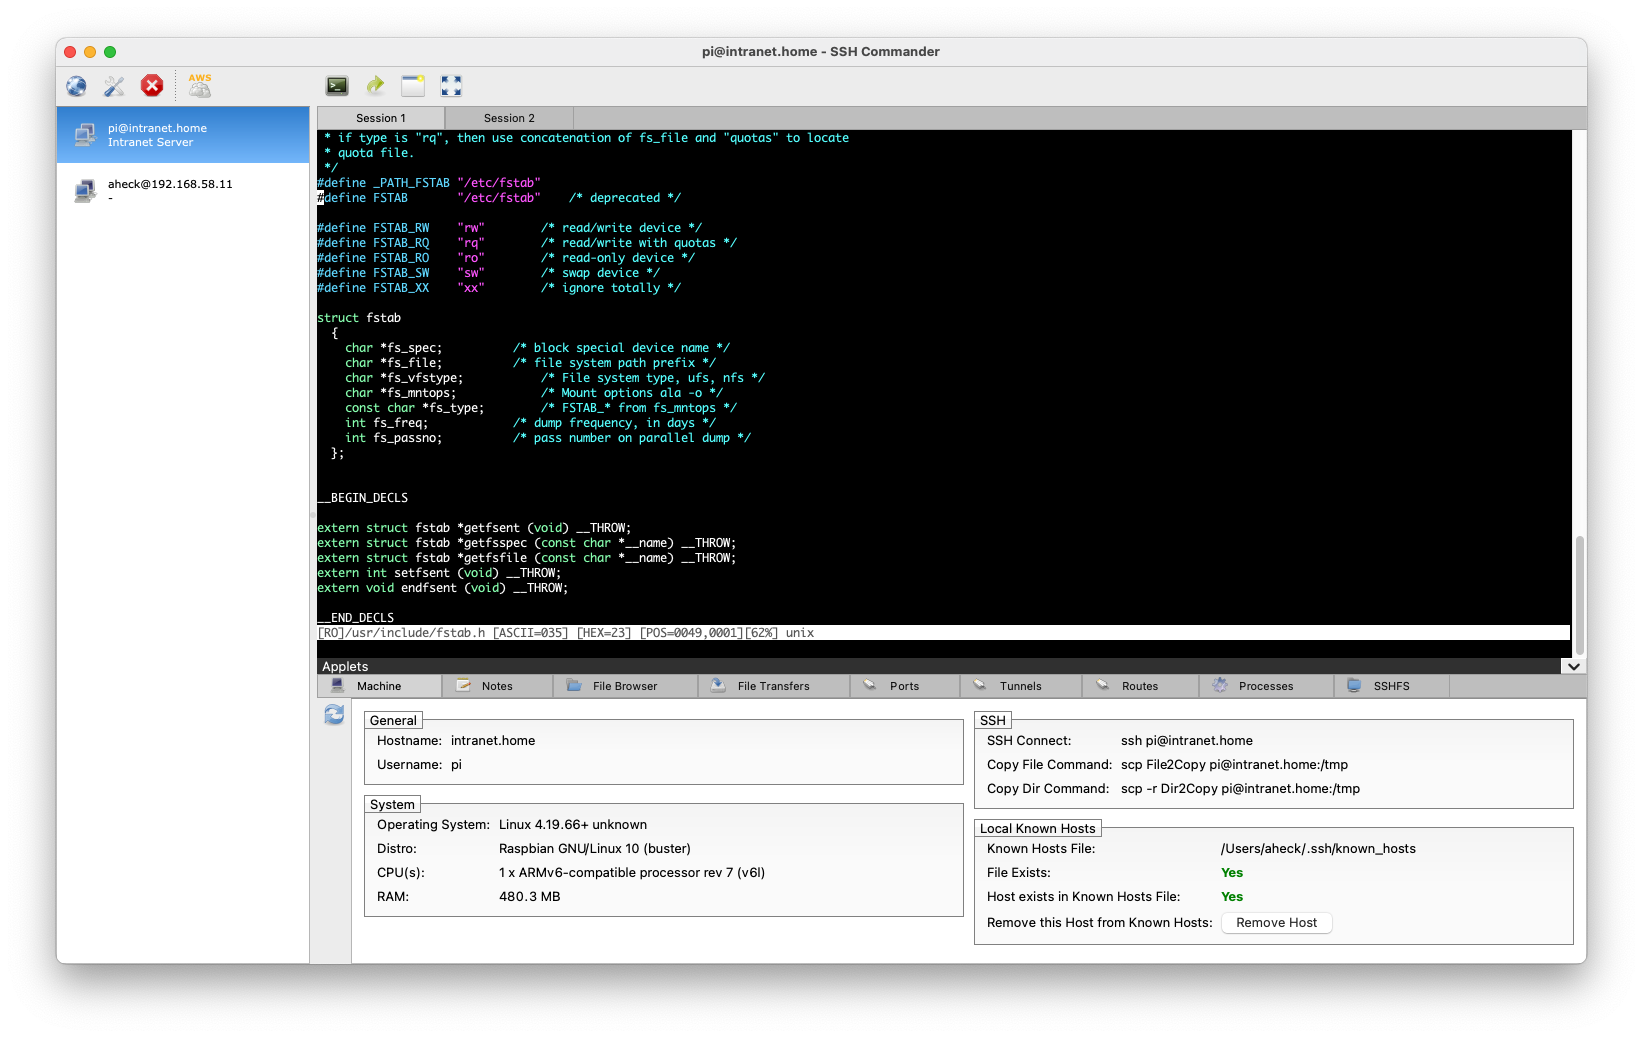 Screenshot of the main windows of SSH Commander